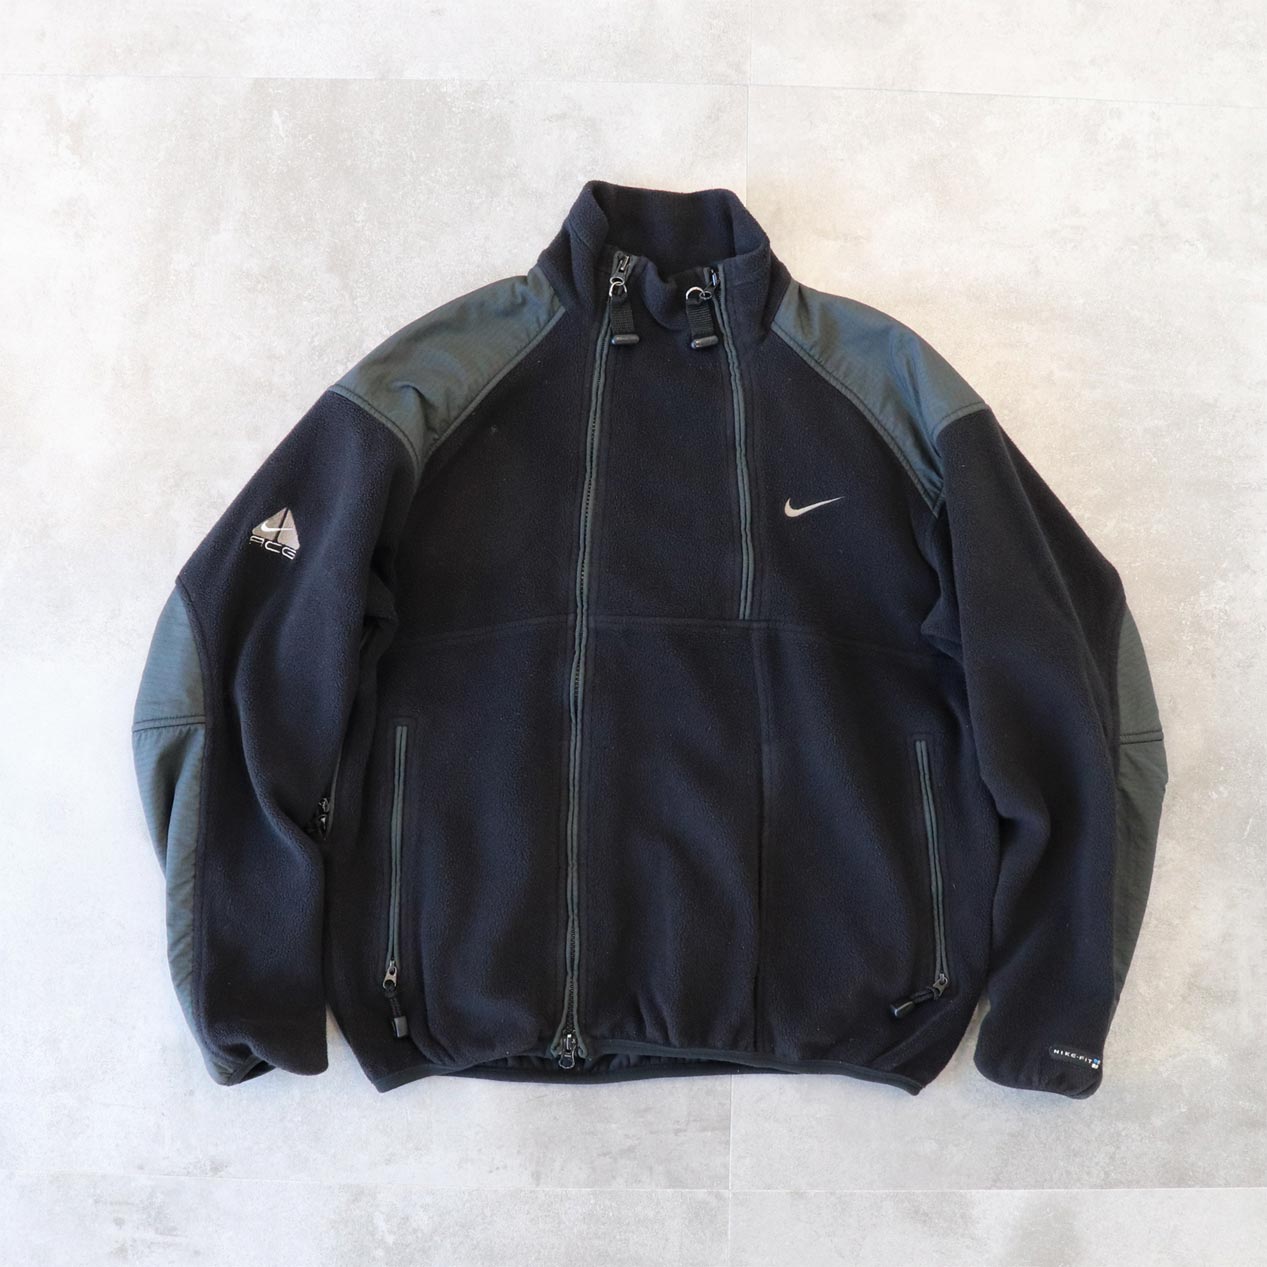 THENO90s vintage nike acg double zip jacket